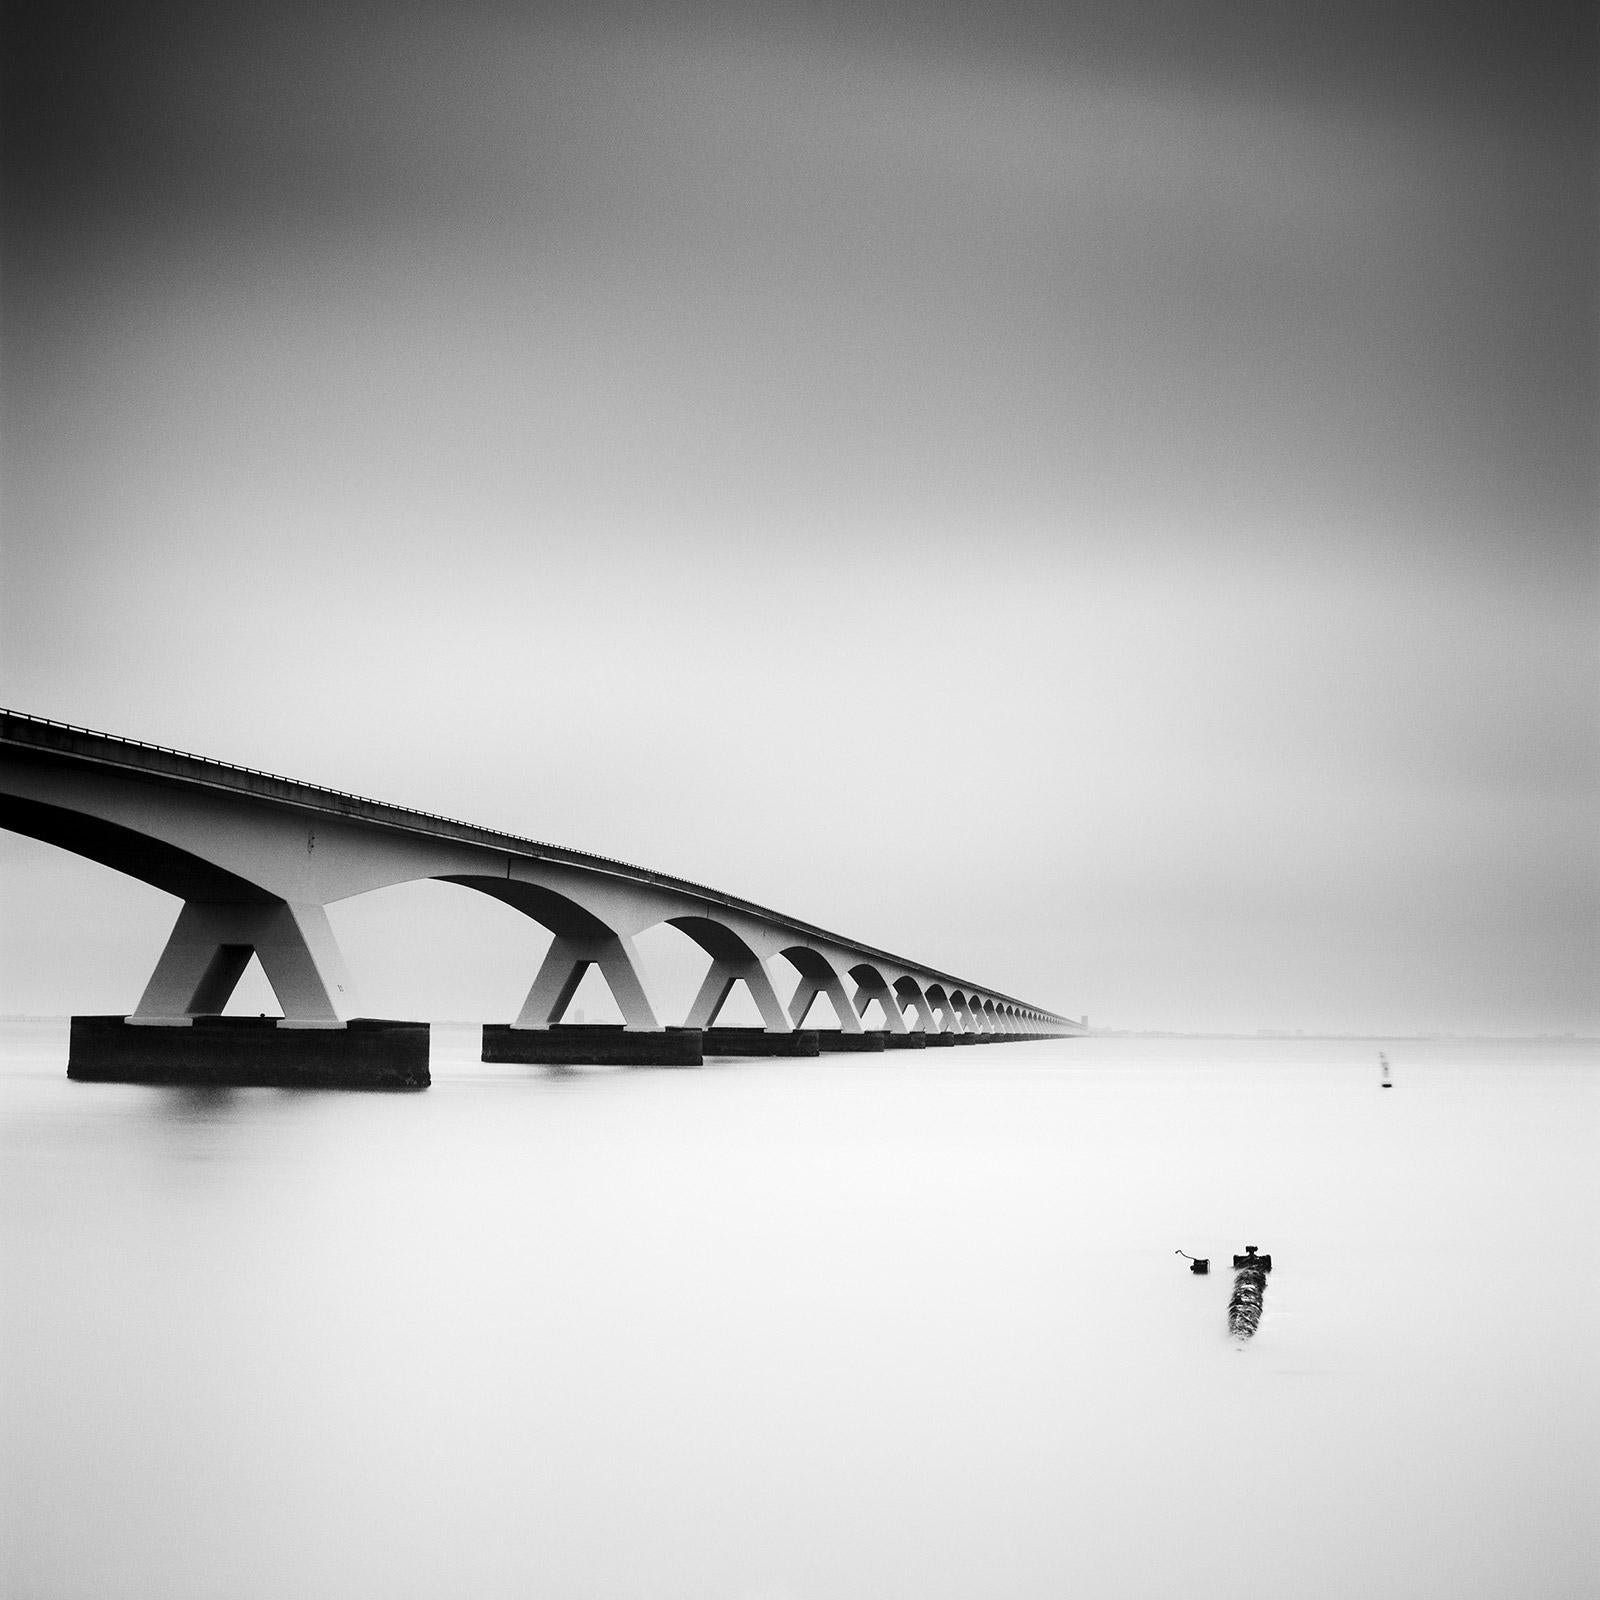 Gerald Berghammer Landscape Photograph - Zeeland Bridge, Netherlands, long exposure, black and white photography, prints